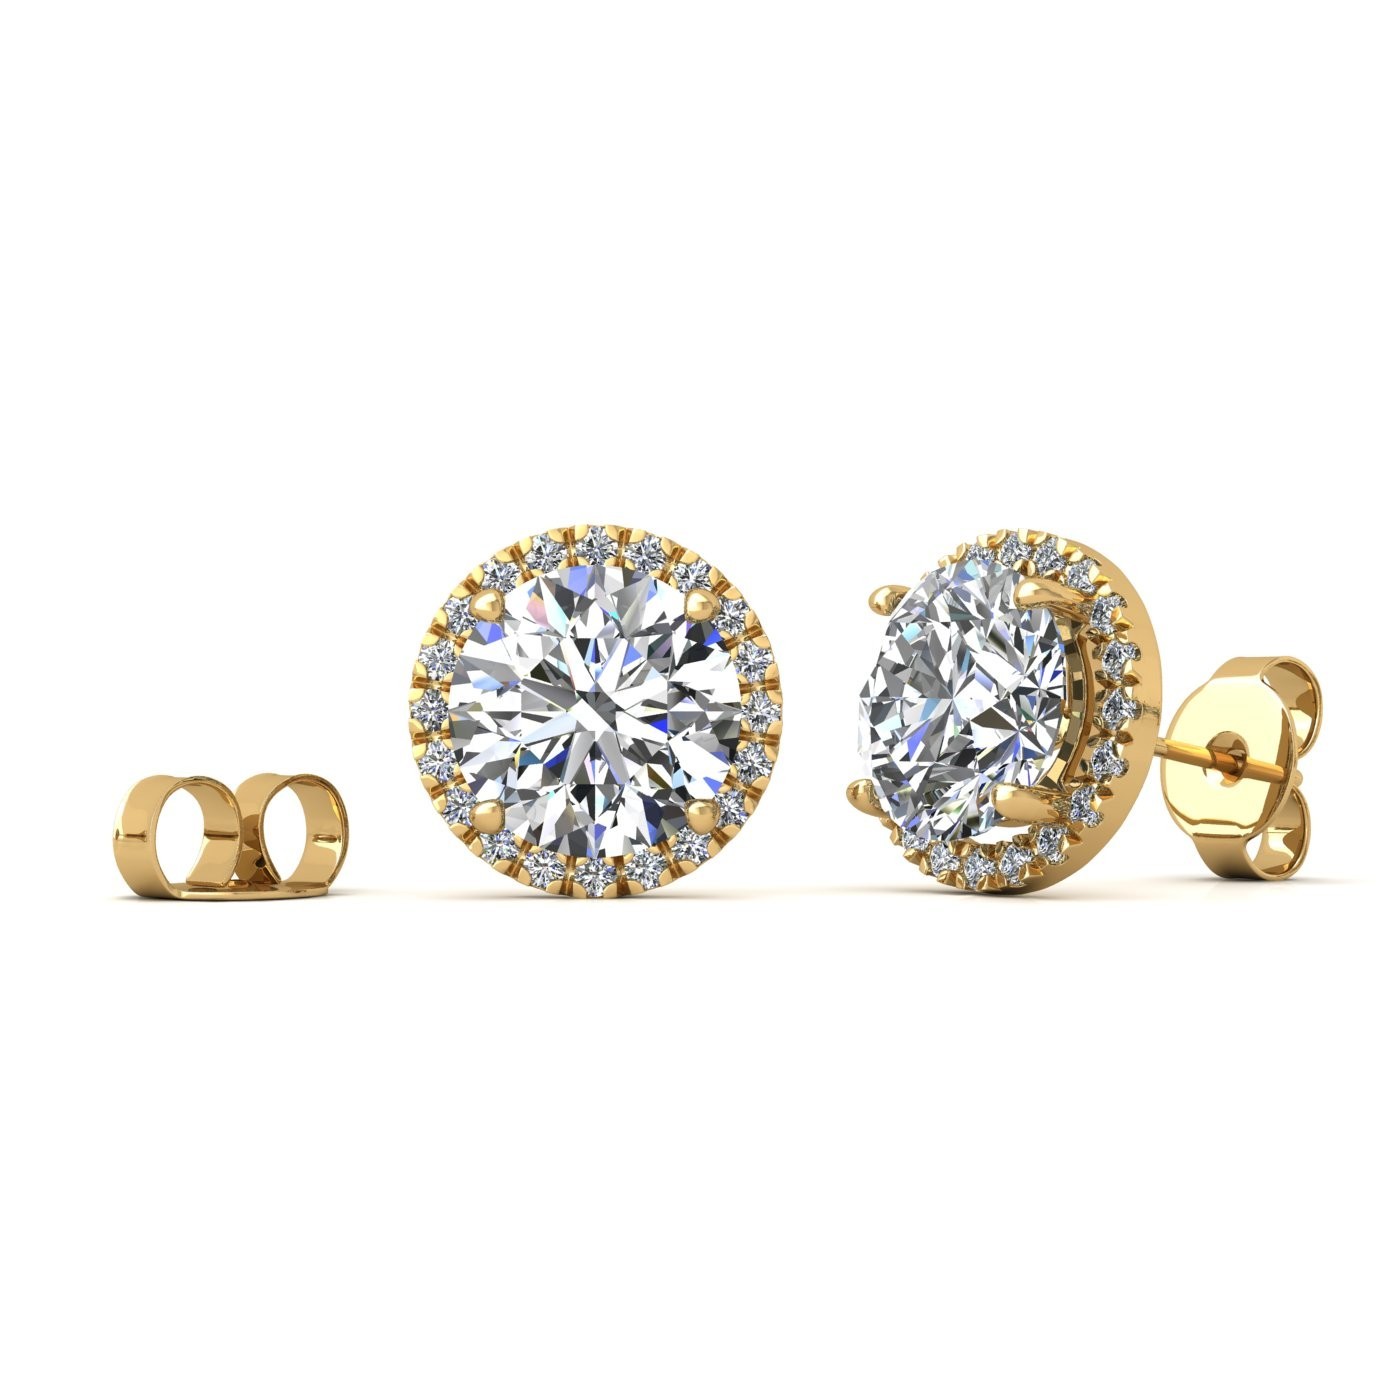 18k yellow gold  1 ct each (2,0 tcw) 4 prongs round shape diamond earrings with diamond pavÉ set halo